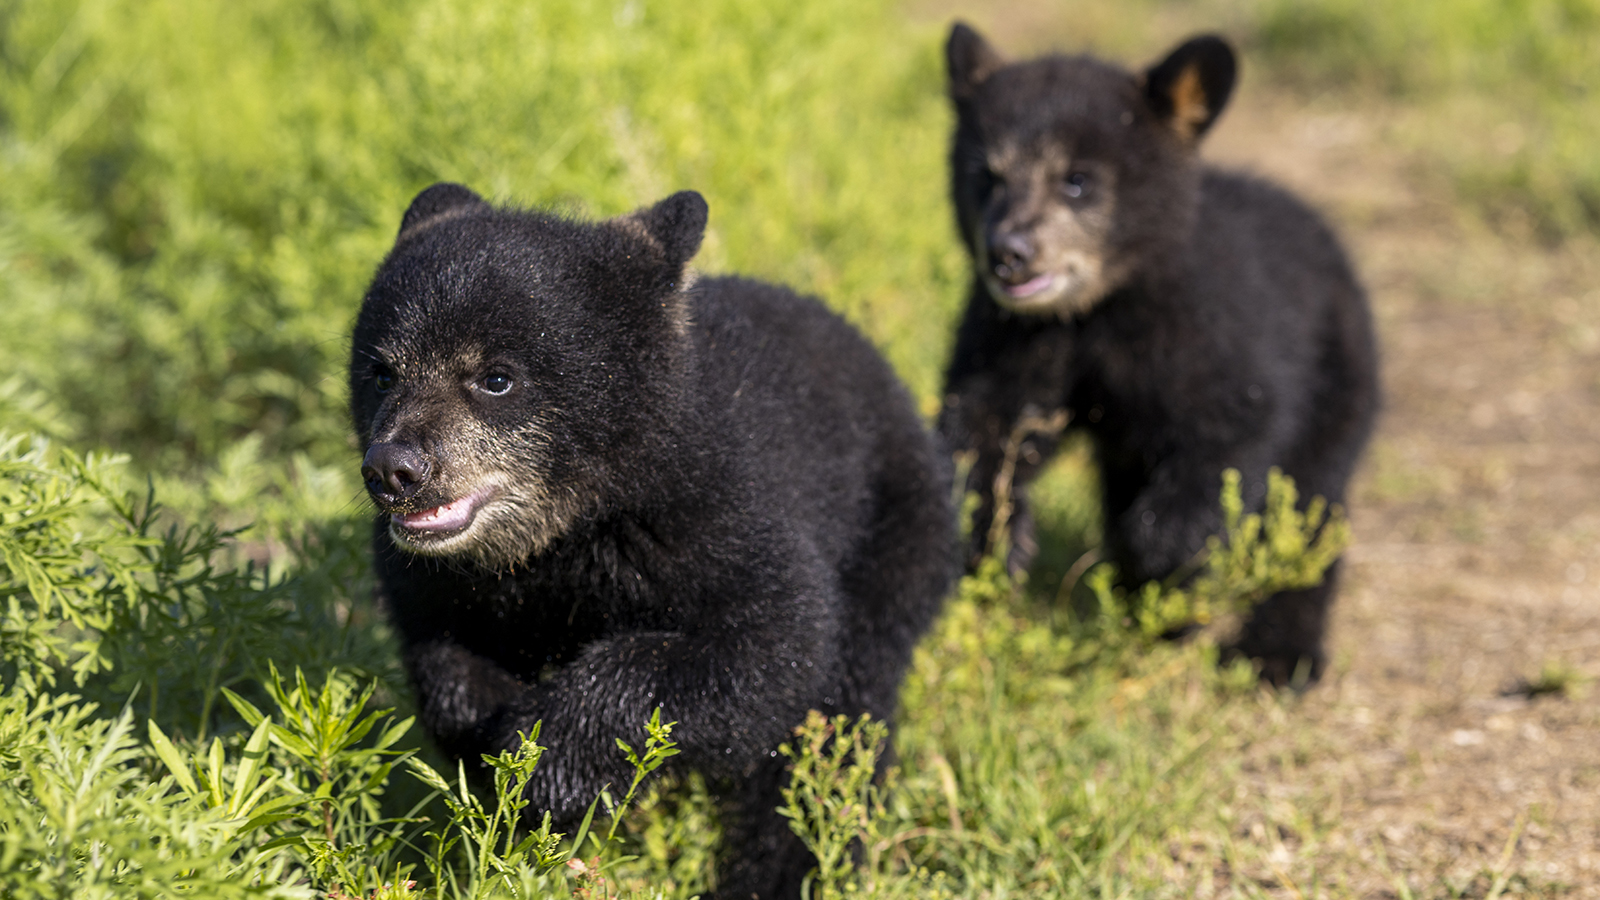 Two American black bear cubs running in a green grass field